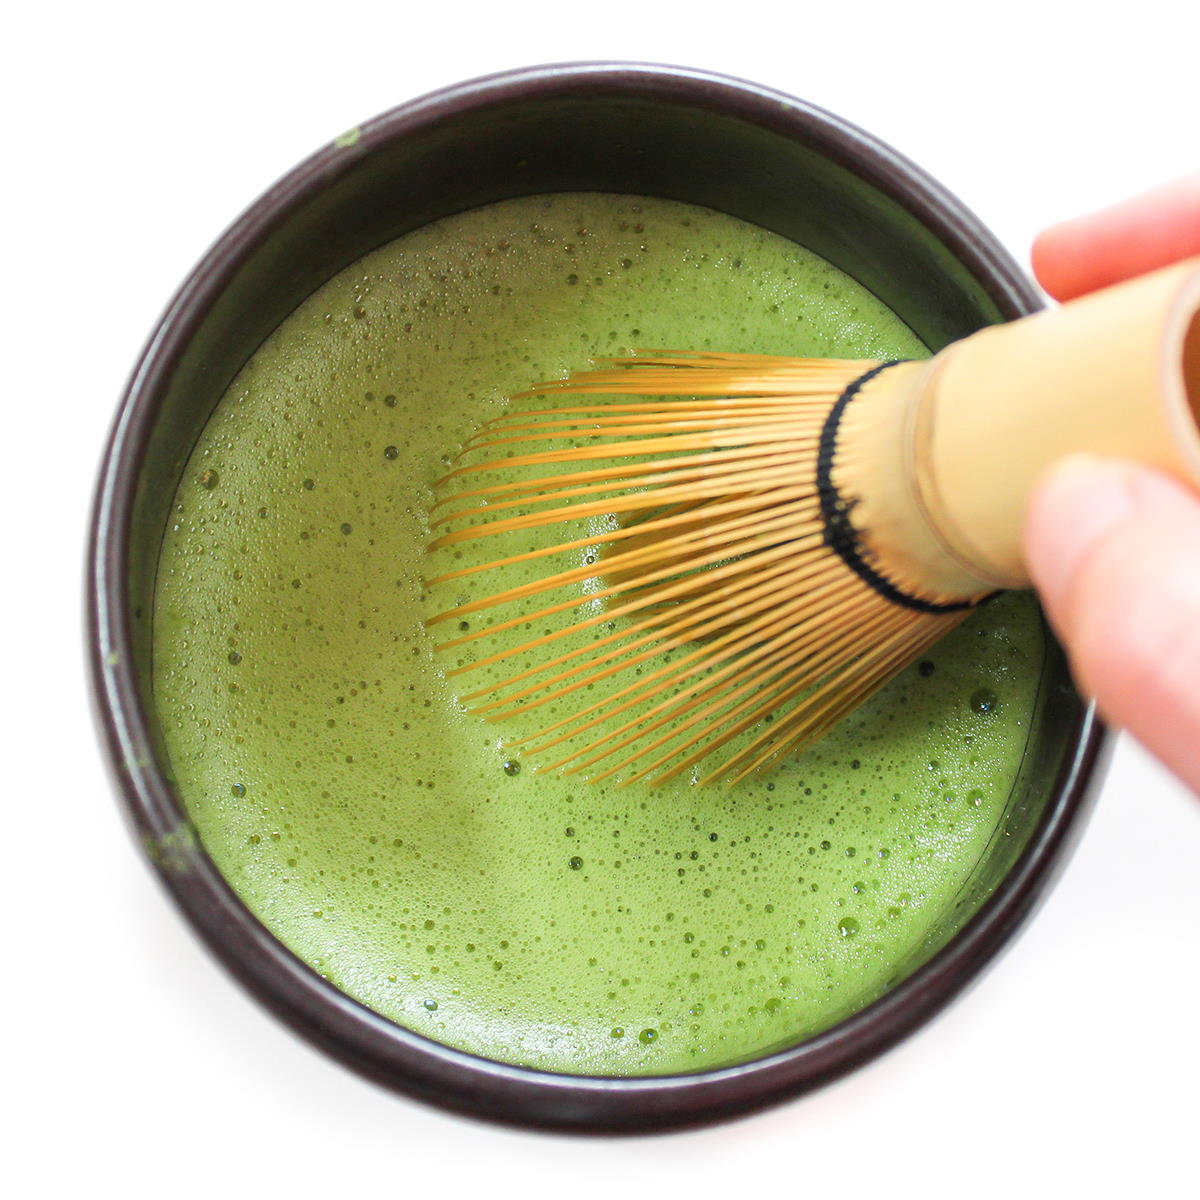 Matcha Green Tea  Japanese Green Tea Powder & Matcha Whisk